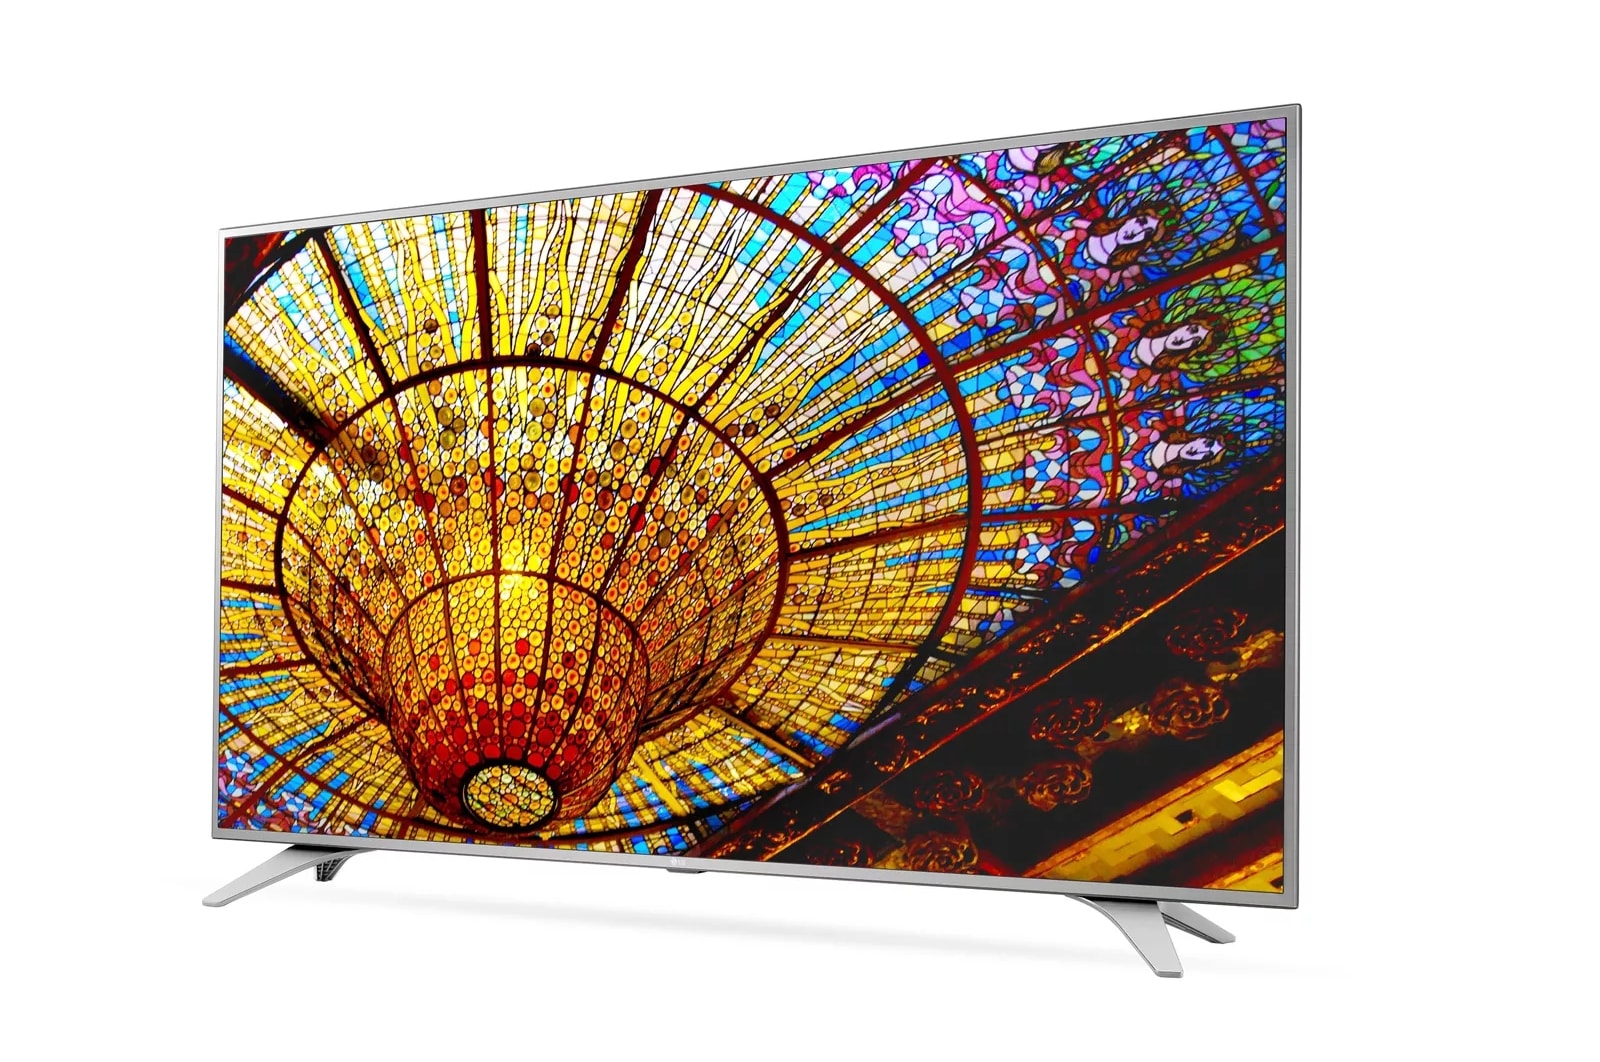 LG 49UH6500: 49-inch 4K UHD Smart LED TV | LG USA